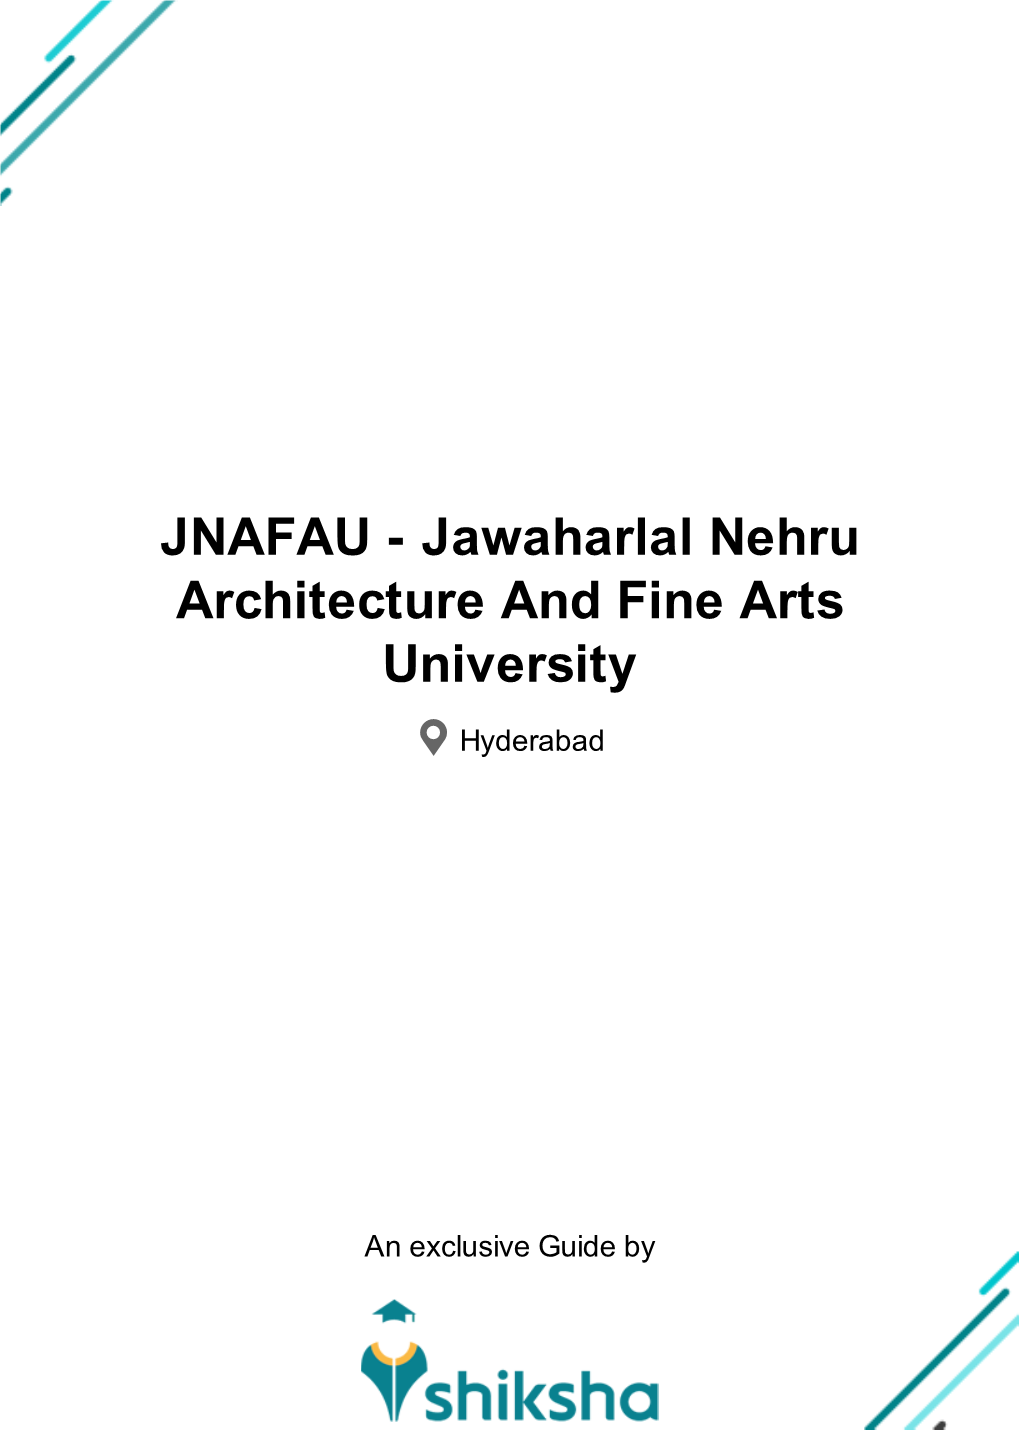 Jawaharlal Nehru Architecture and Fine Arts University